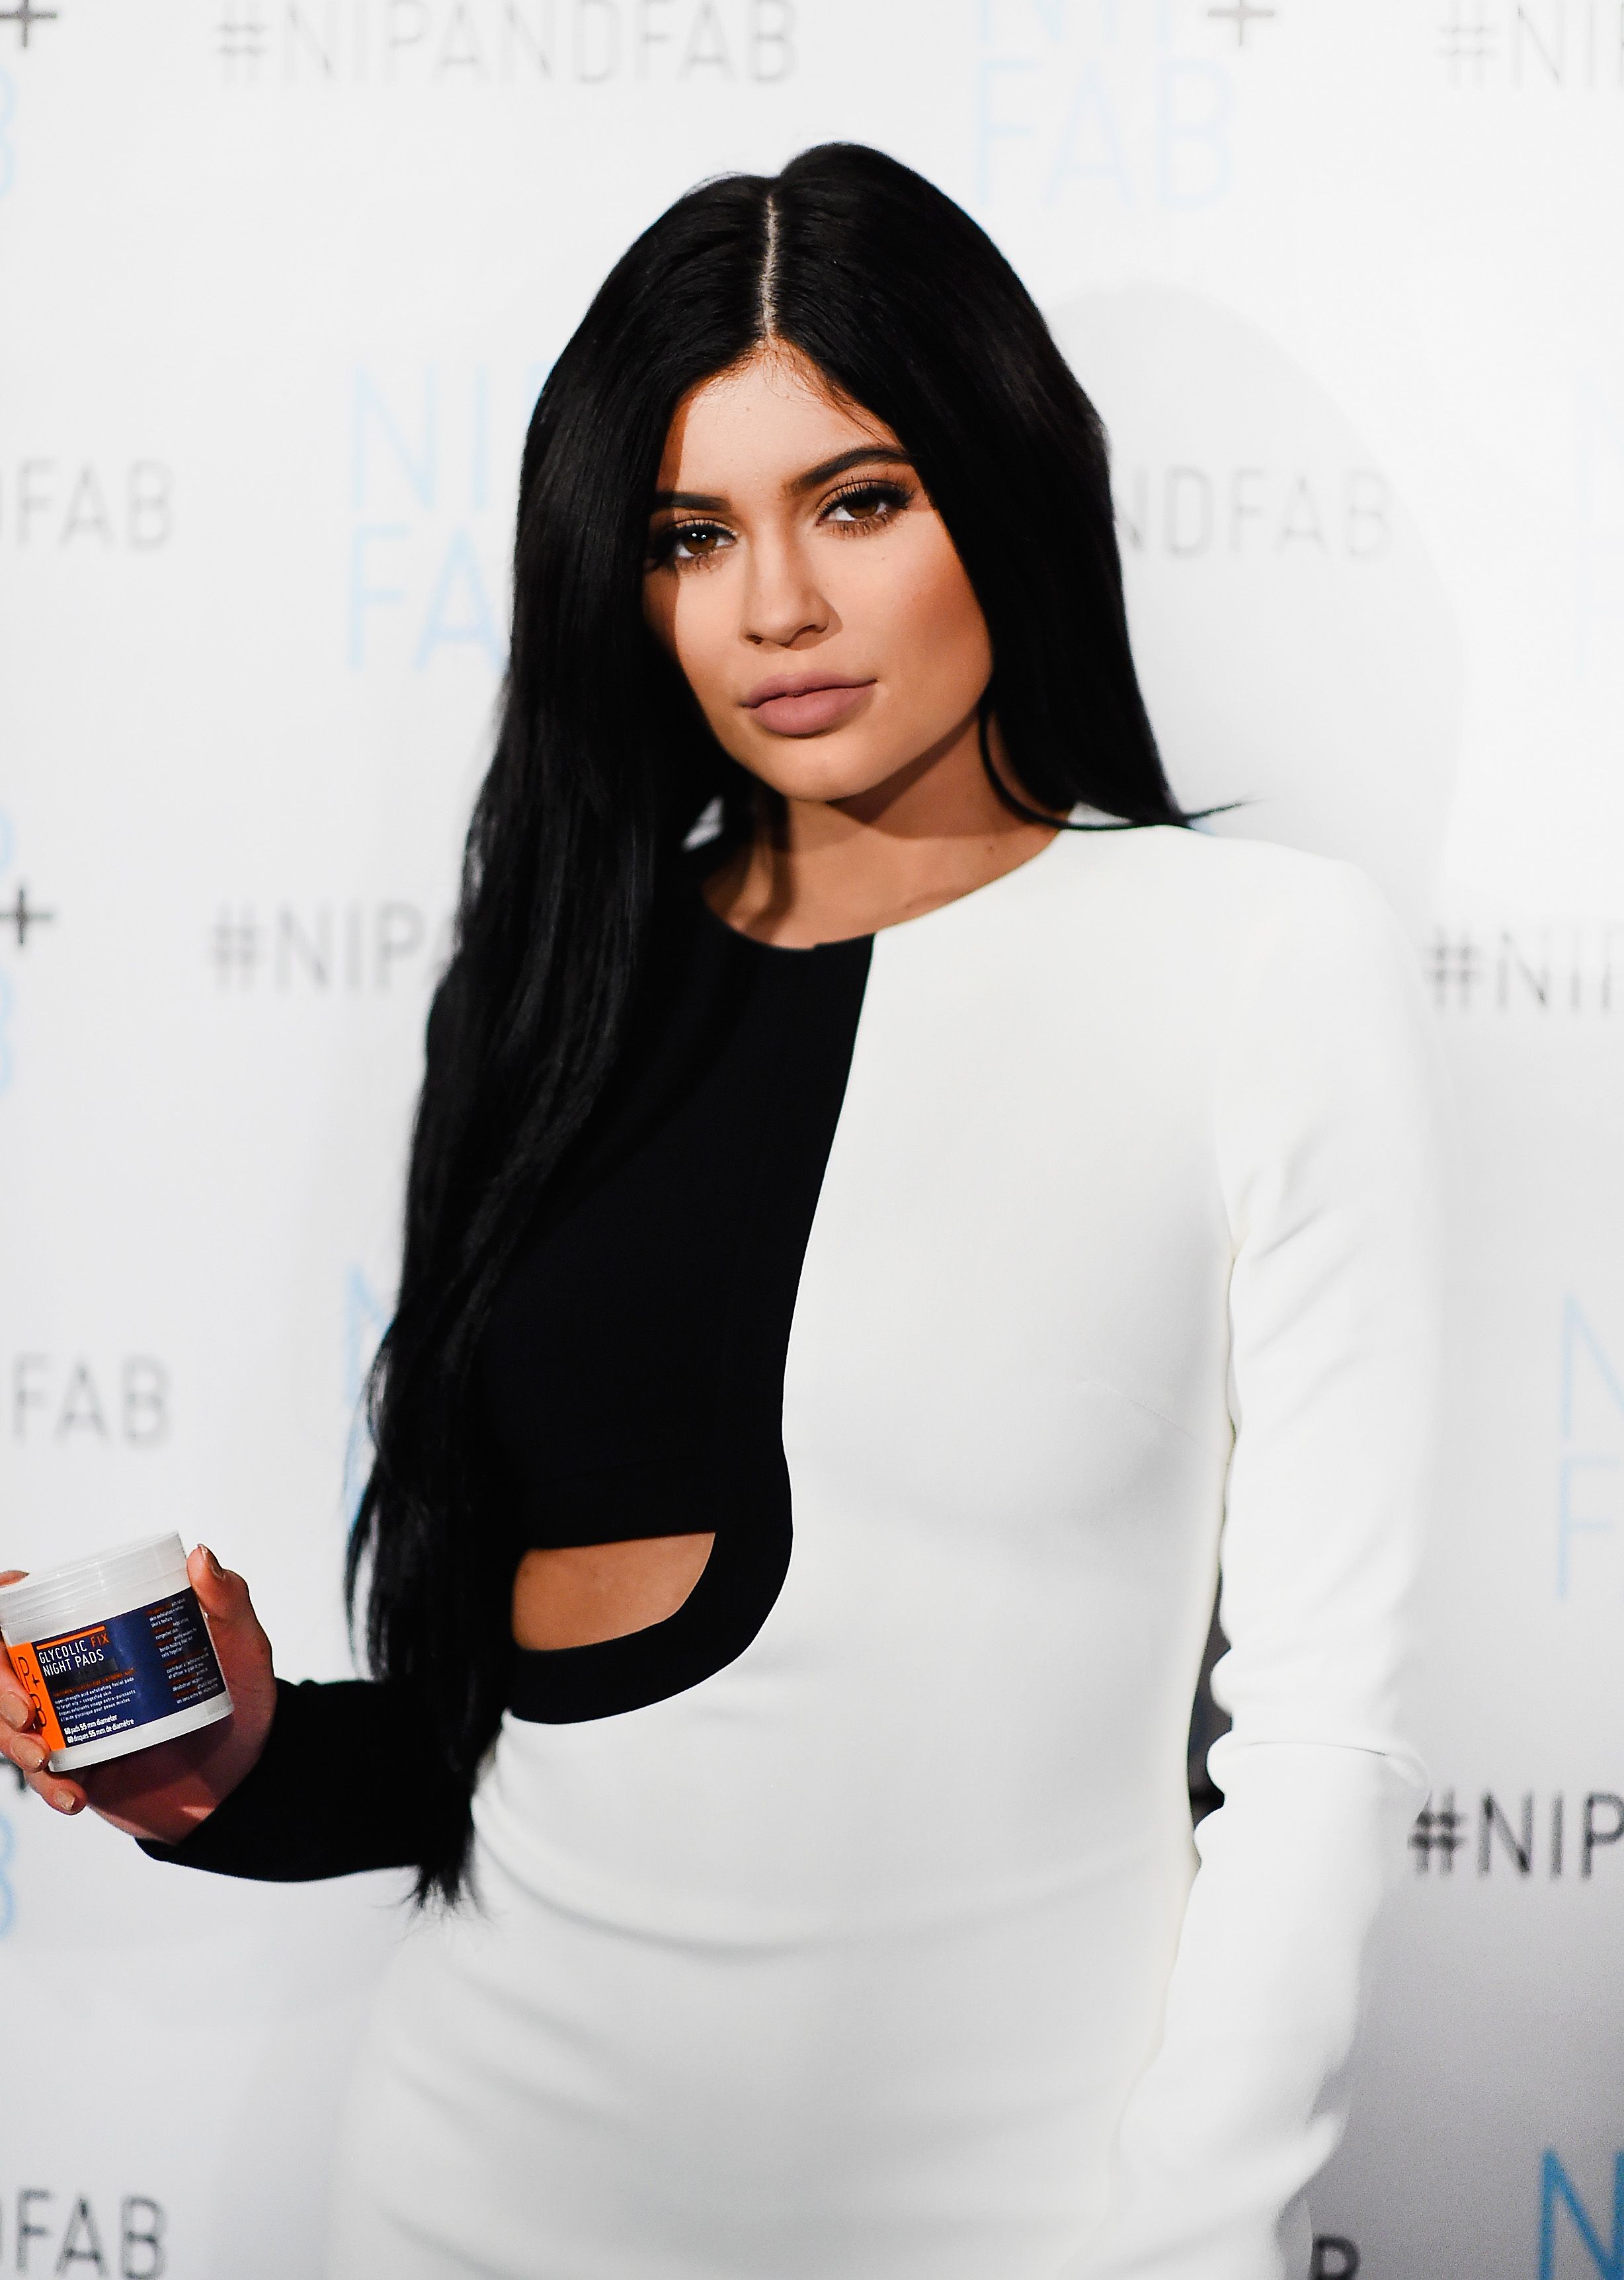 Kylie Jenner Lands "Seven-Figure Deal" As Puma's New